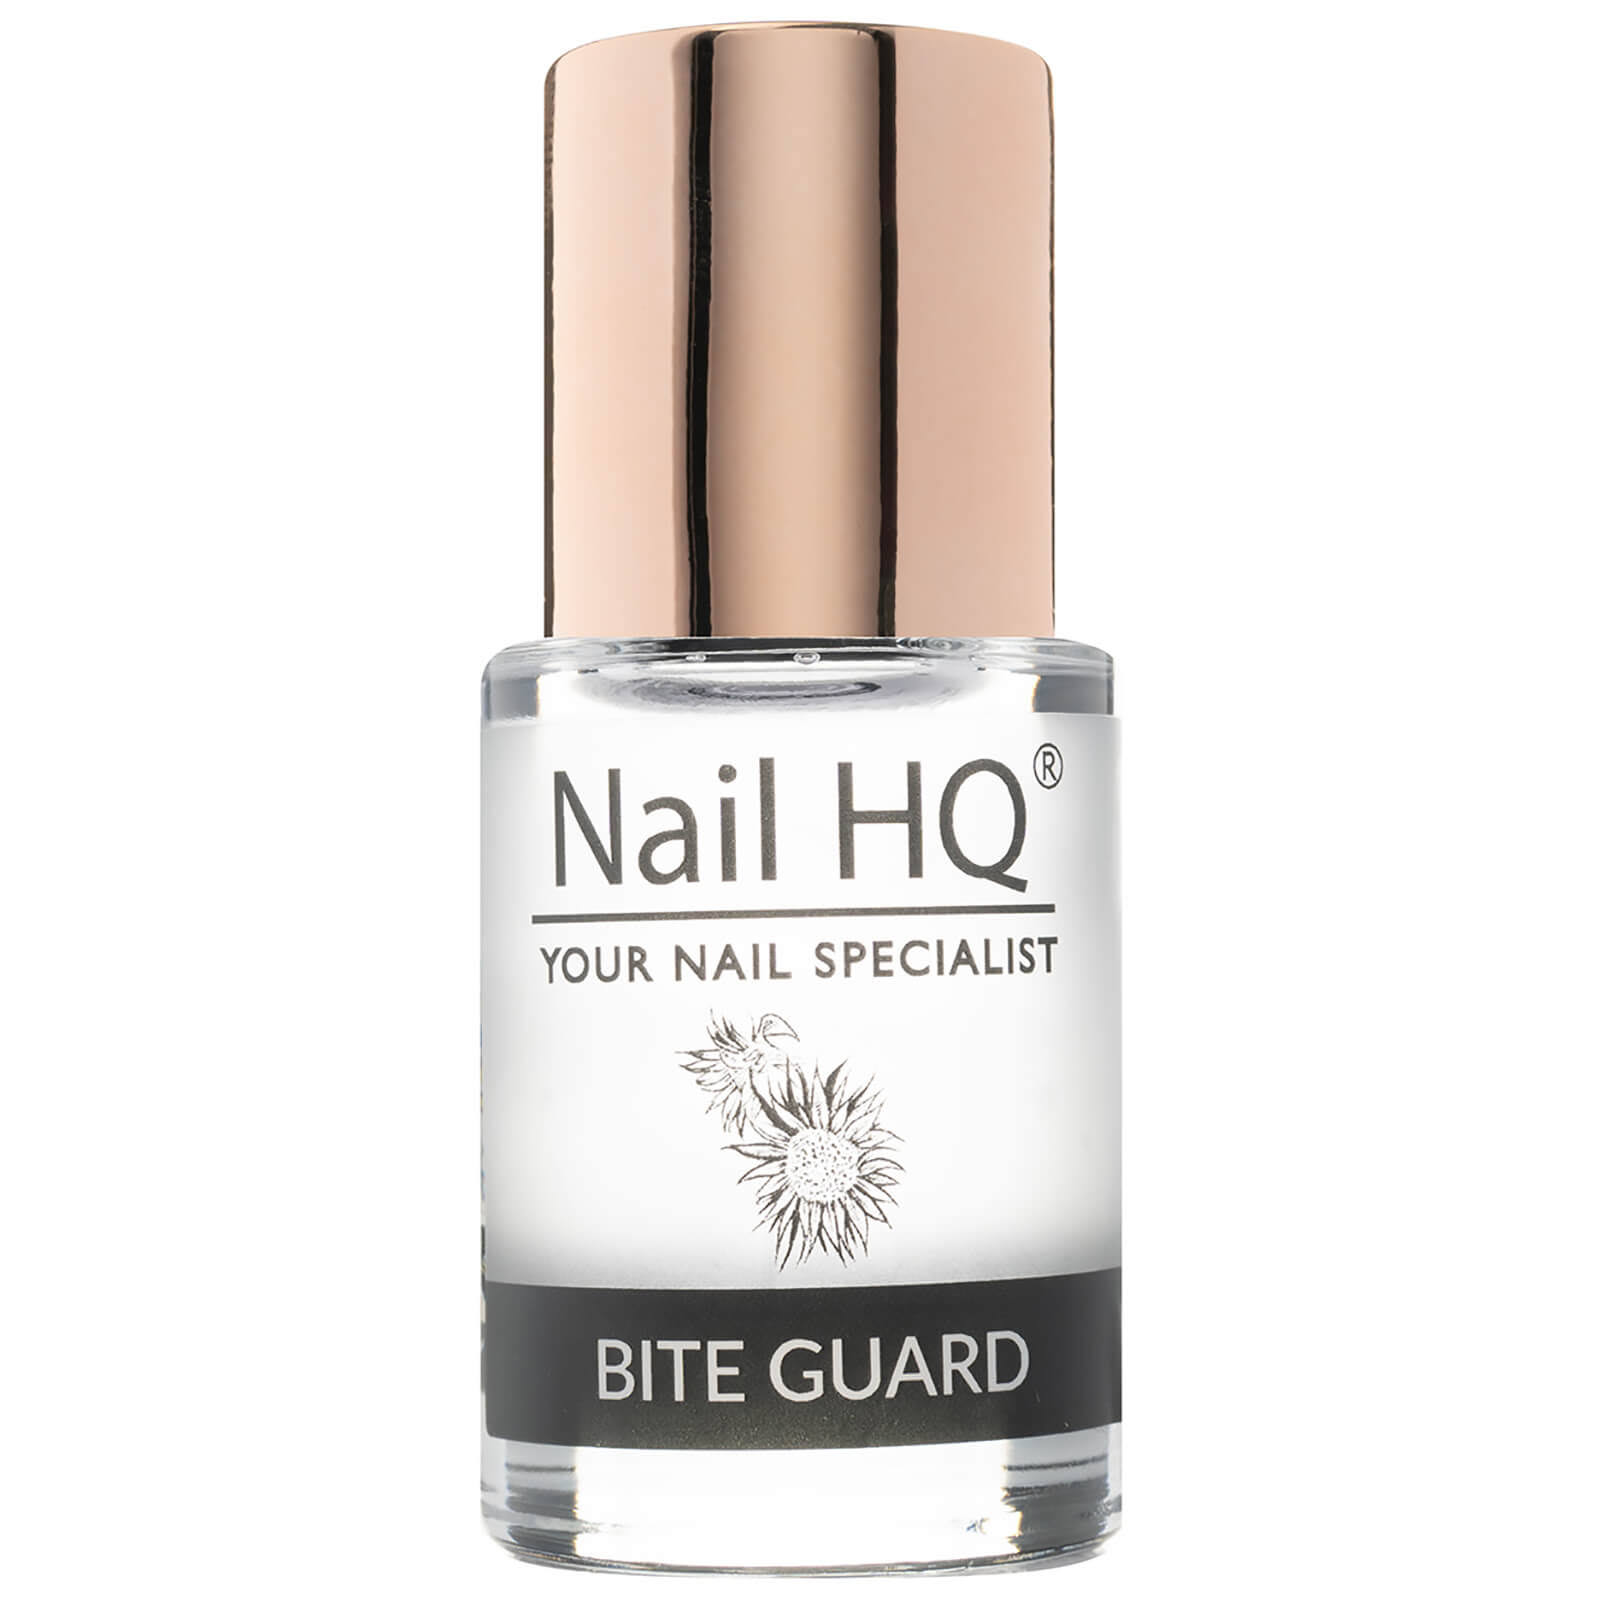 Nail HQ Bite Guard